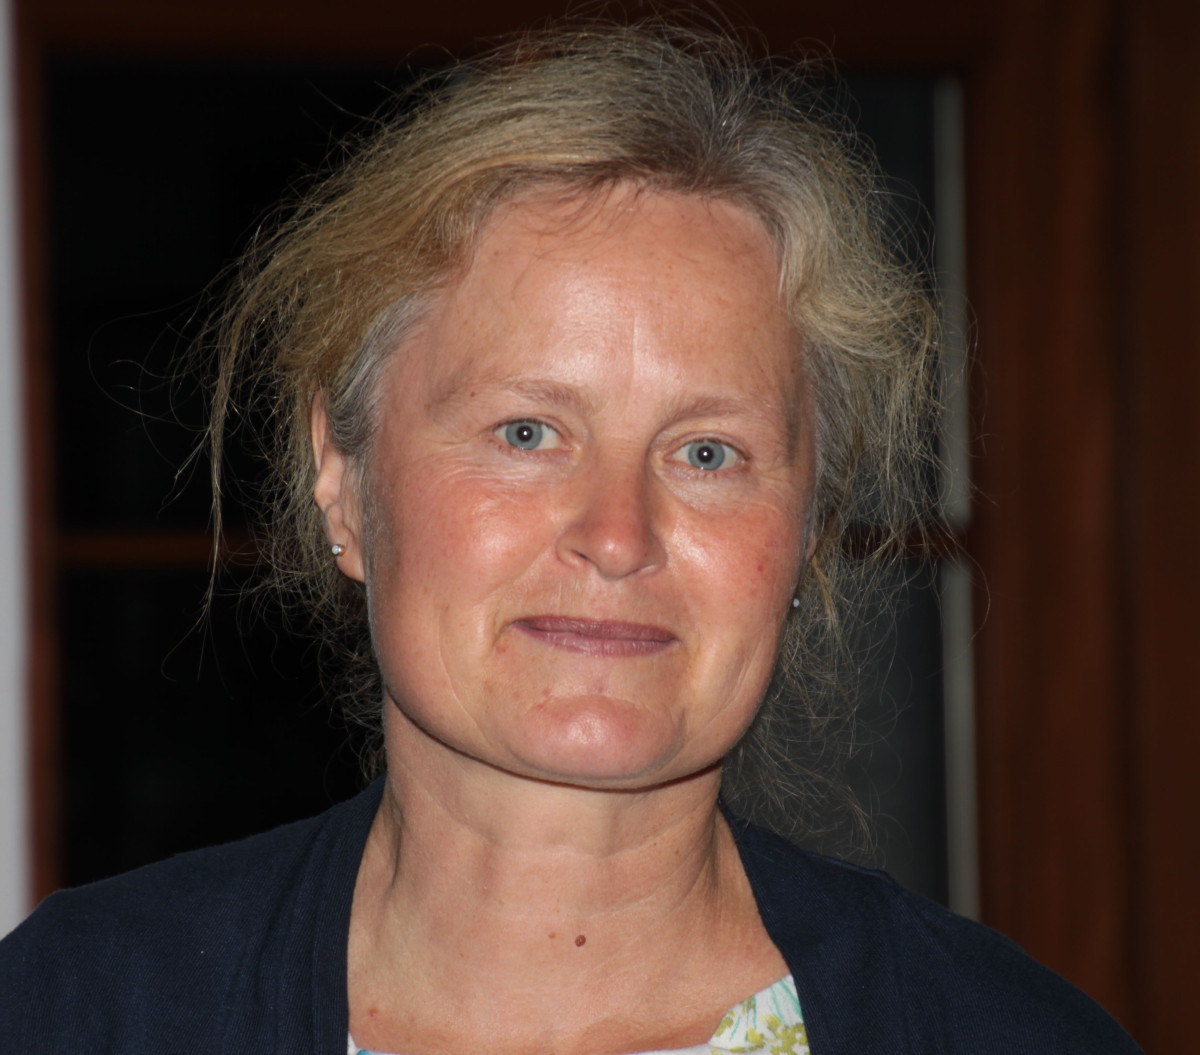 Marlene Berger-Stöckl